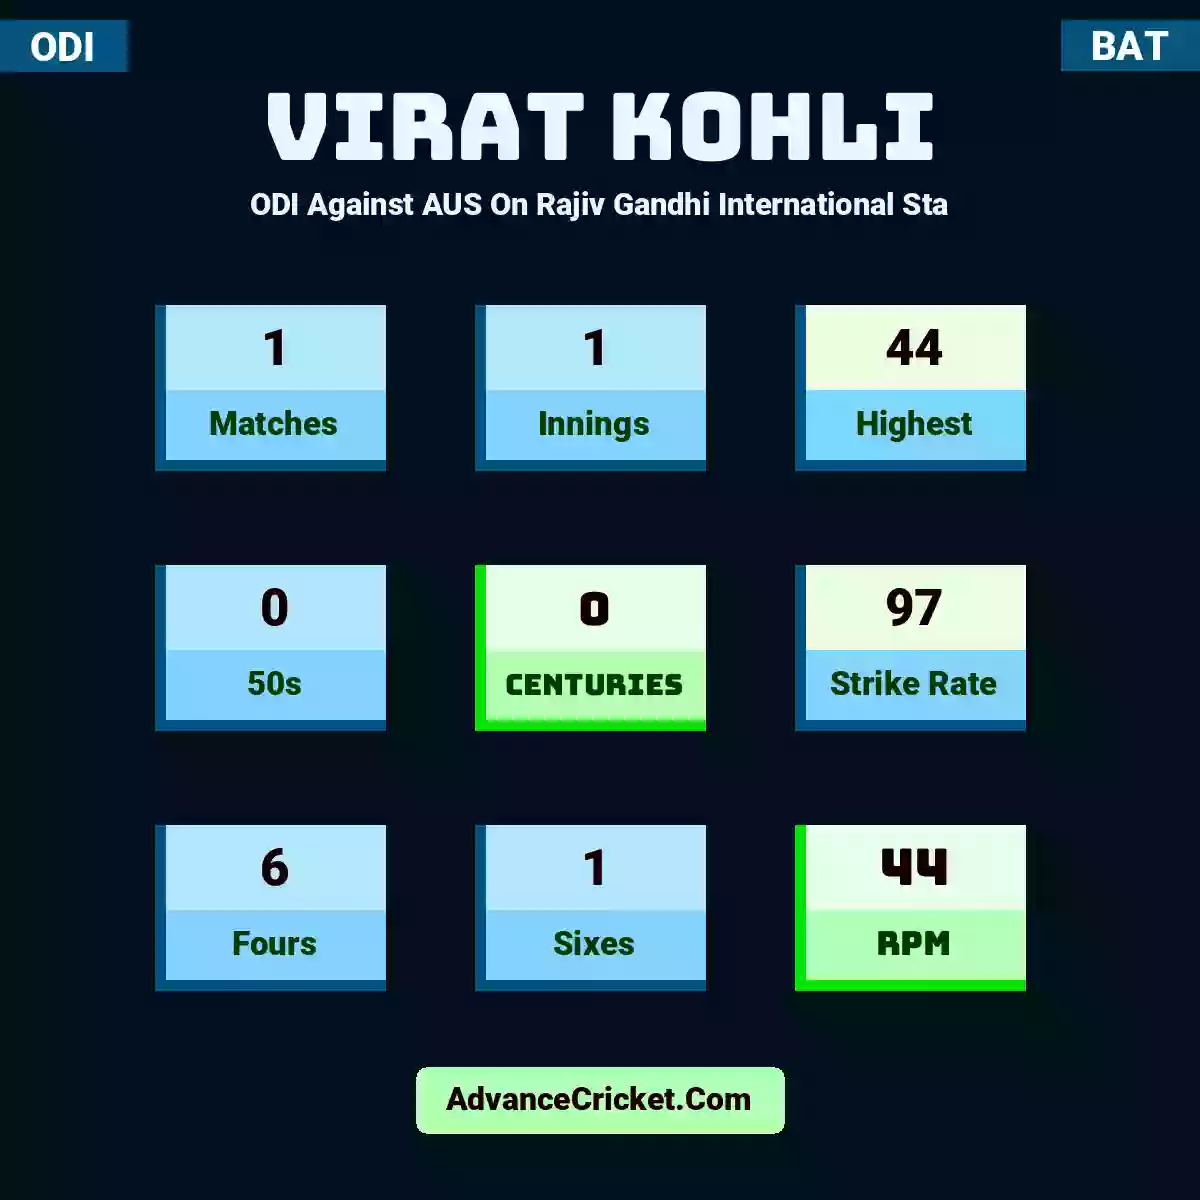 Virat Kohli ODI  Against AUS On Rajiv Gandhi International Sta, Virat Kohli played 1 matches, scored 44 runs as highest, 0 half-centuries, and 0 centuries, with a strike rate of 97. V.Kohli hit 6 fours and 1 sixes, with an RPM of 44.